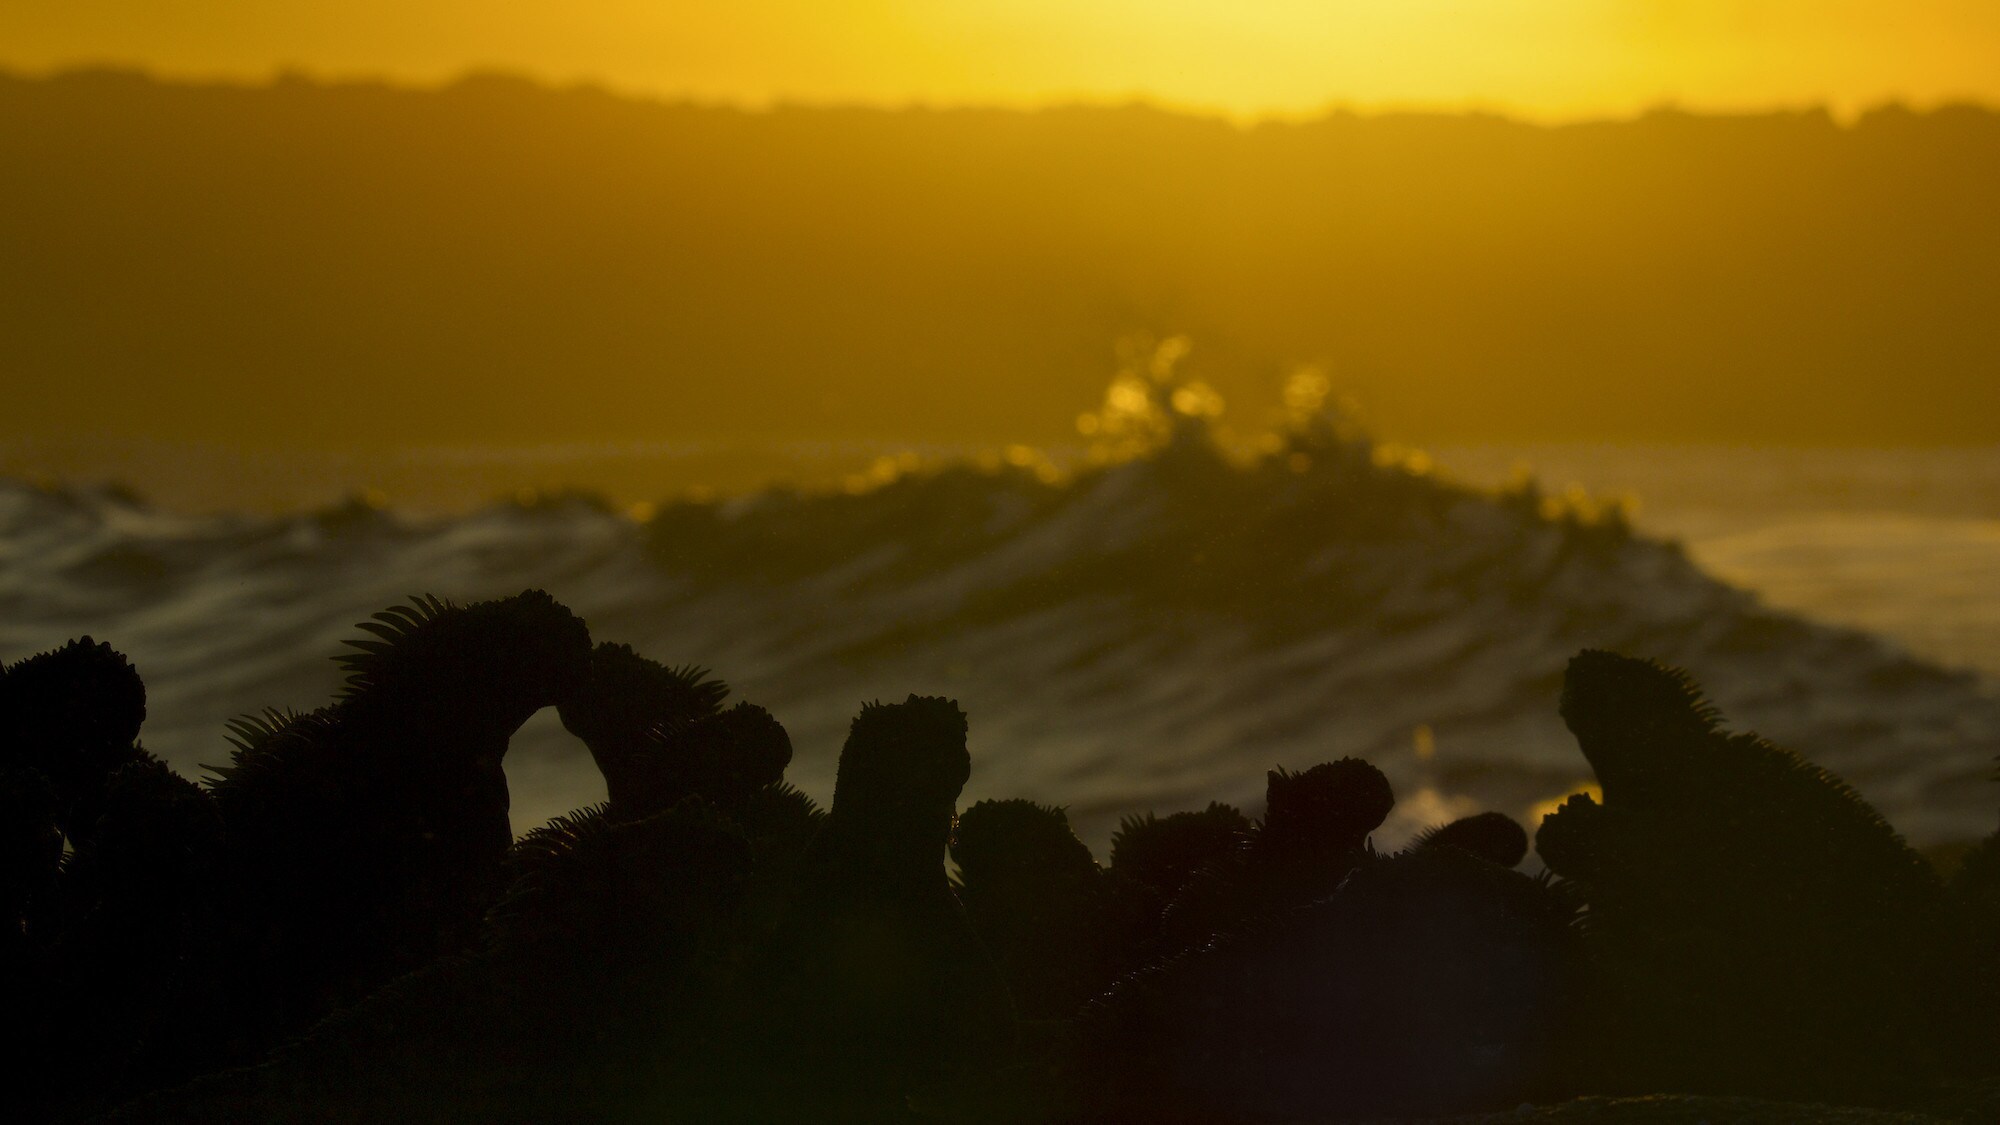 Marine Iguanas on a rock during sunset. (National Geographic for Disney+/Sam Stewart)